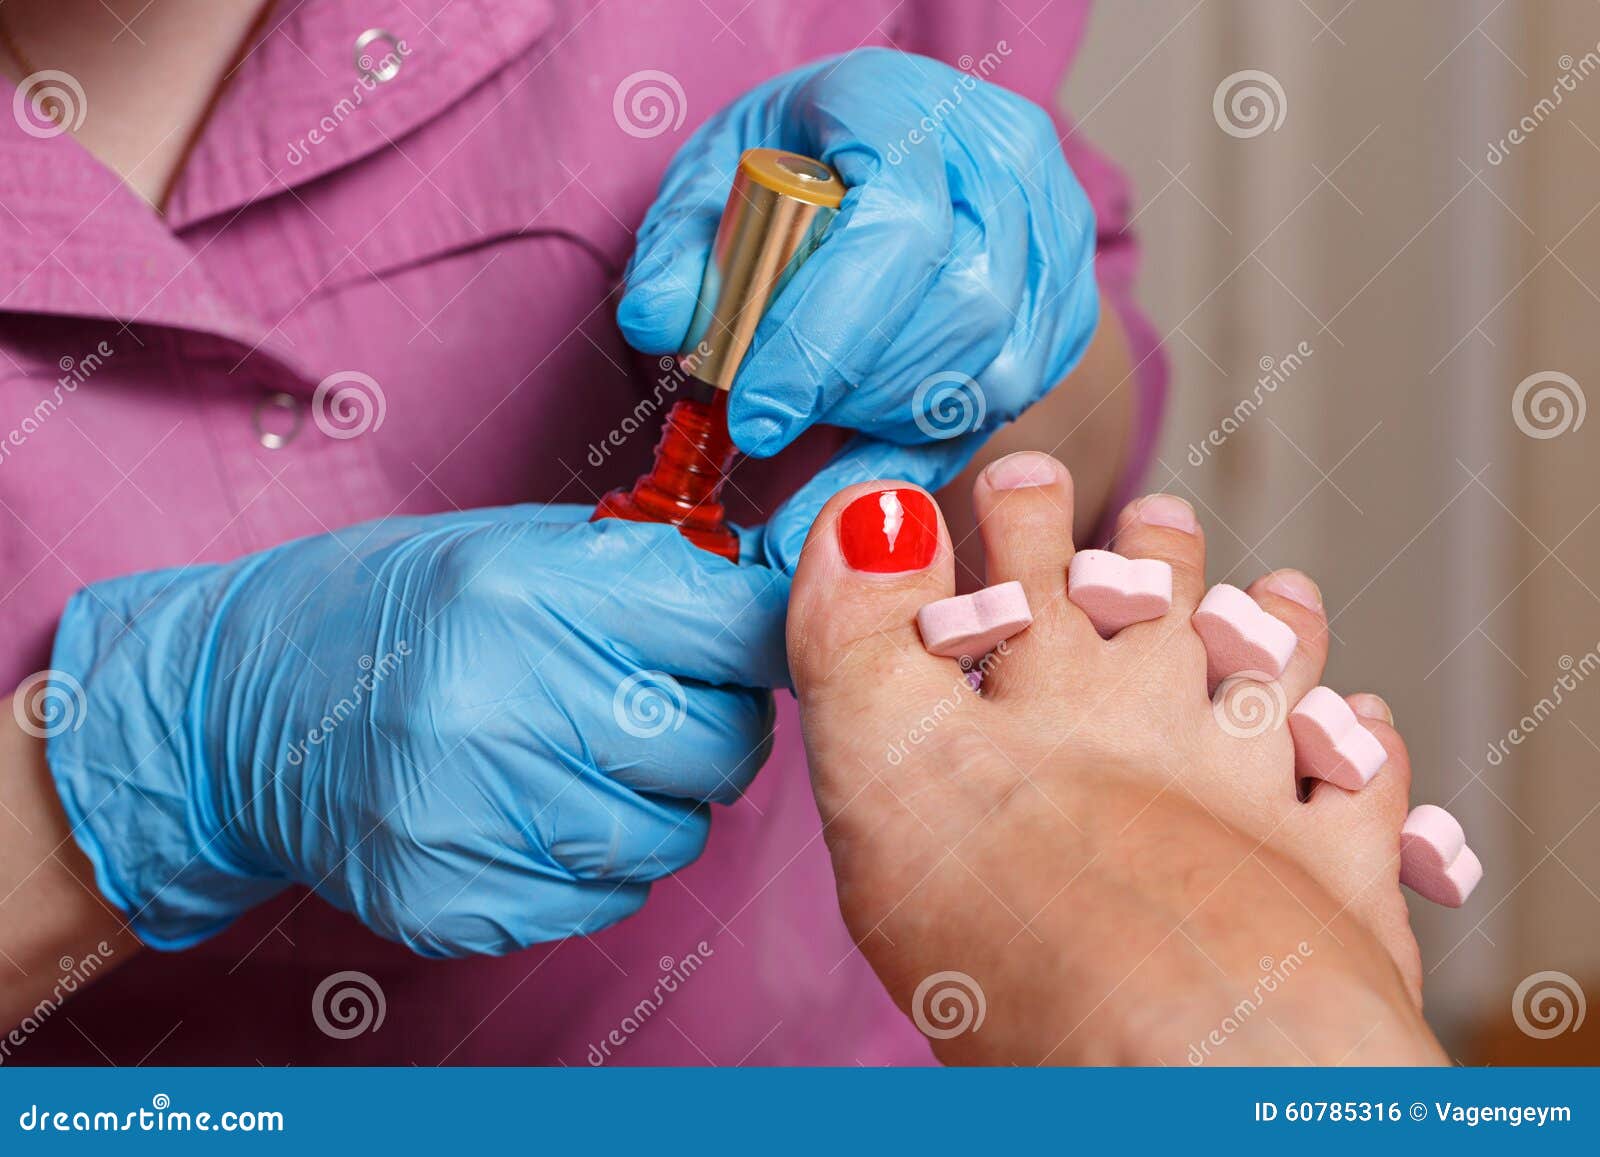 chiropody spa salon. applying gel nail polish.